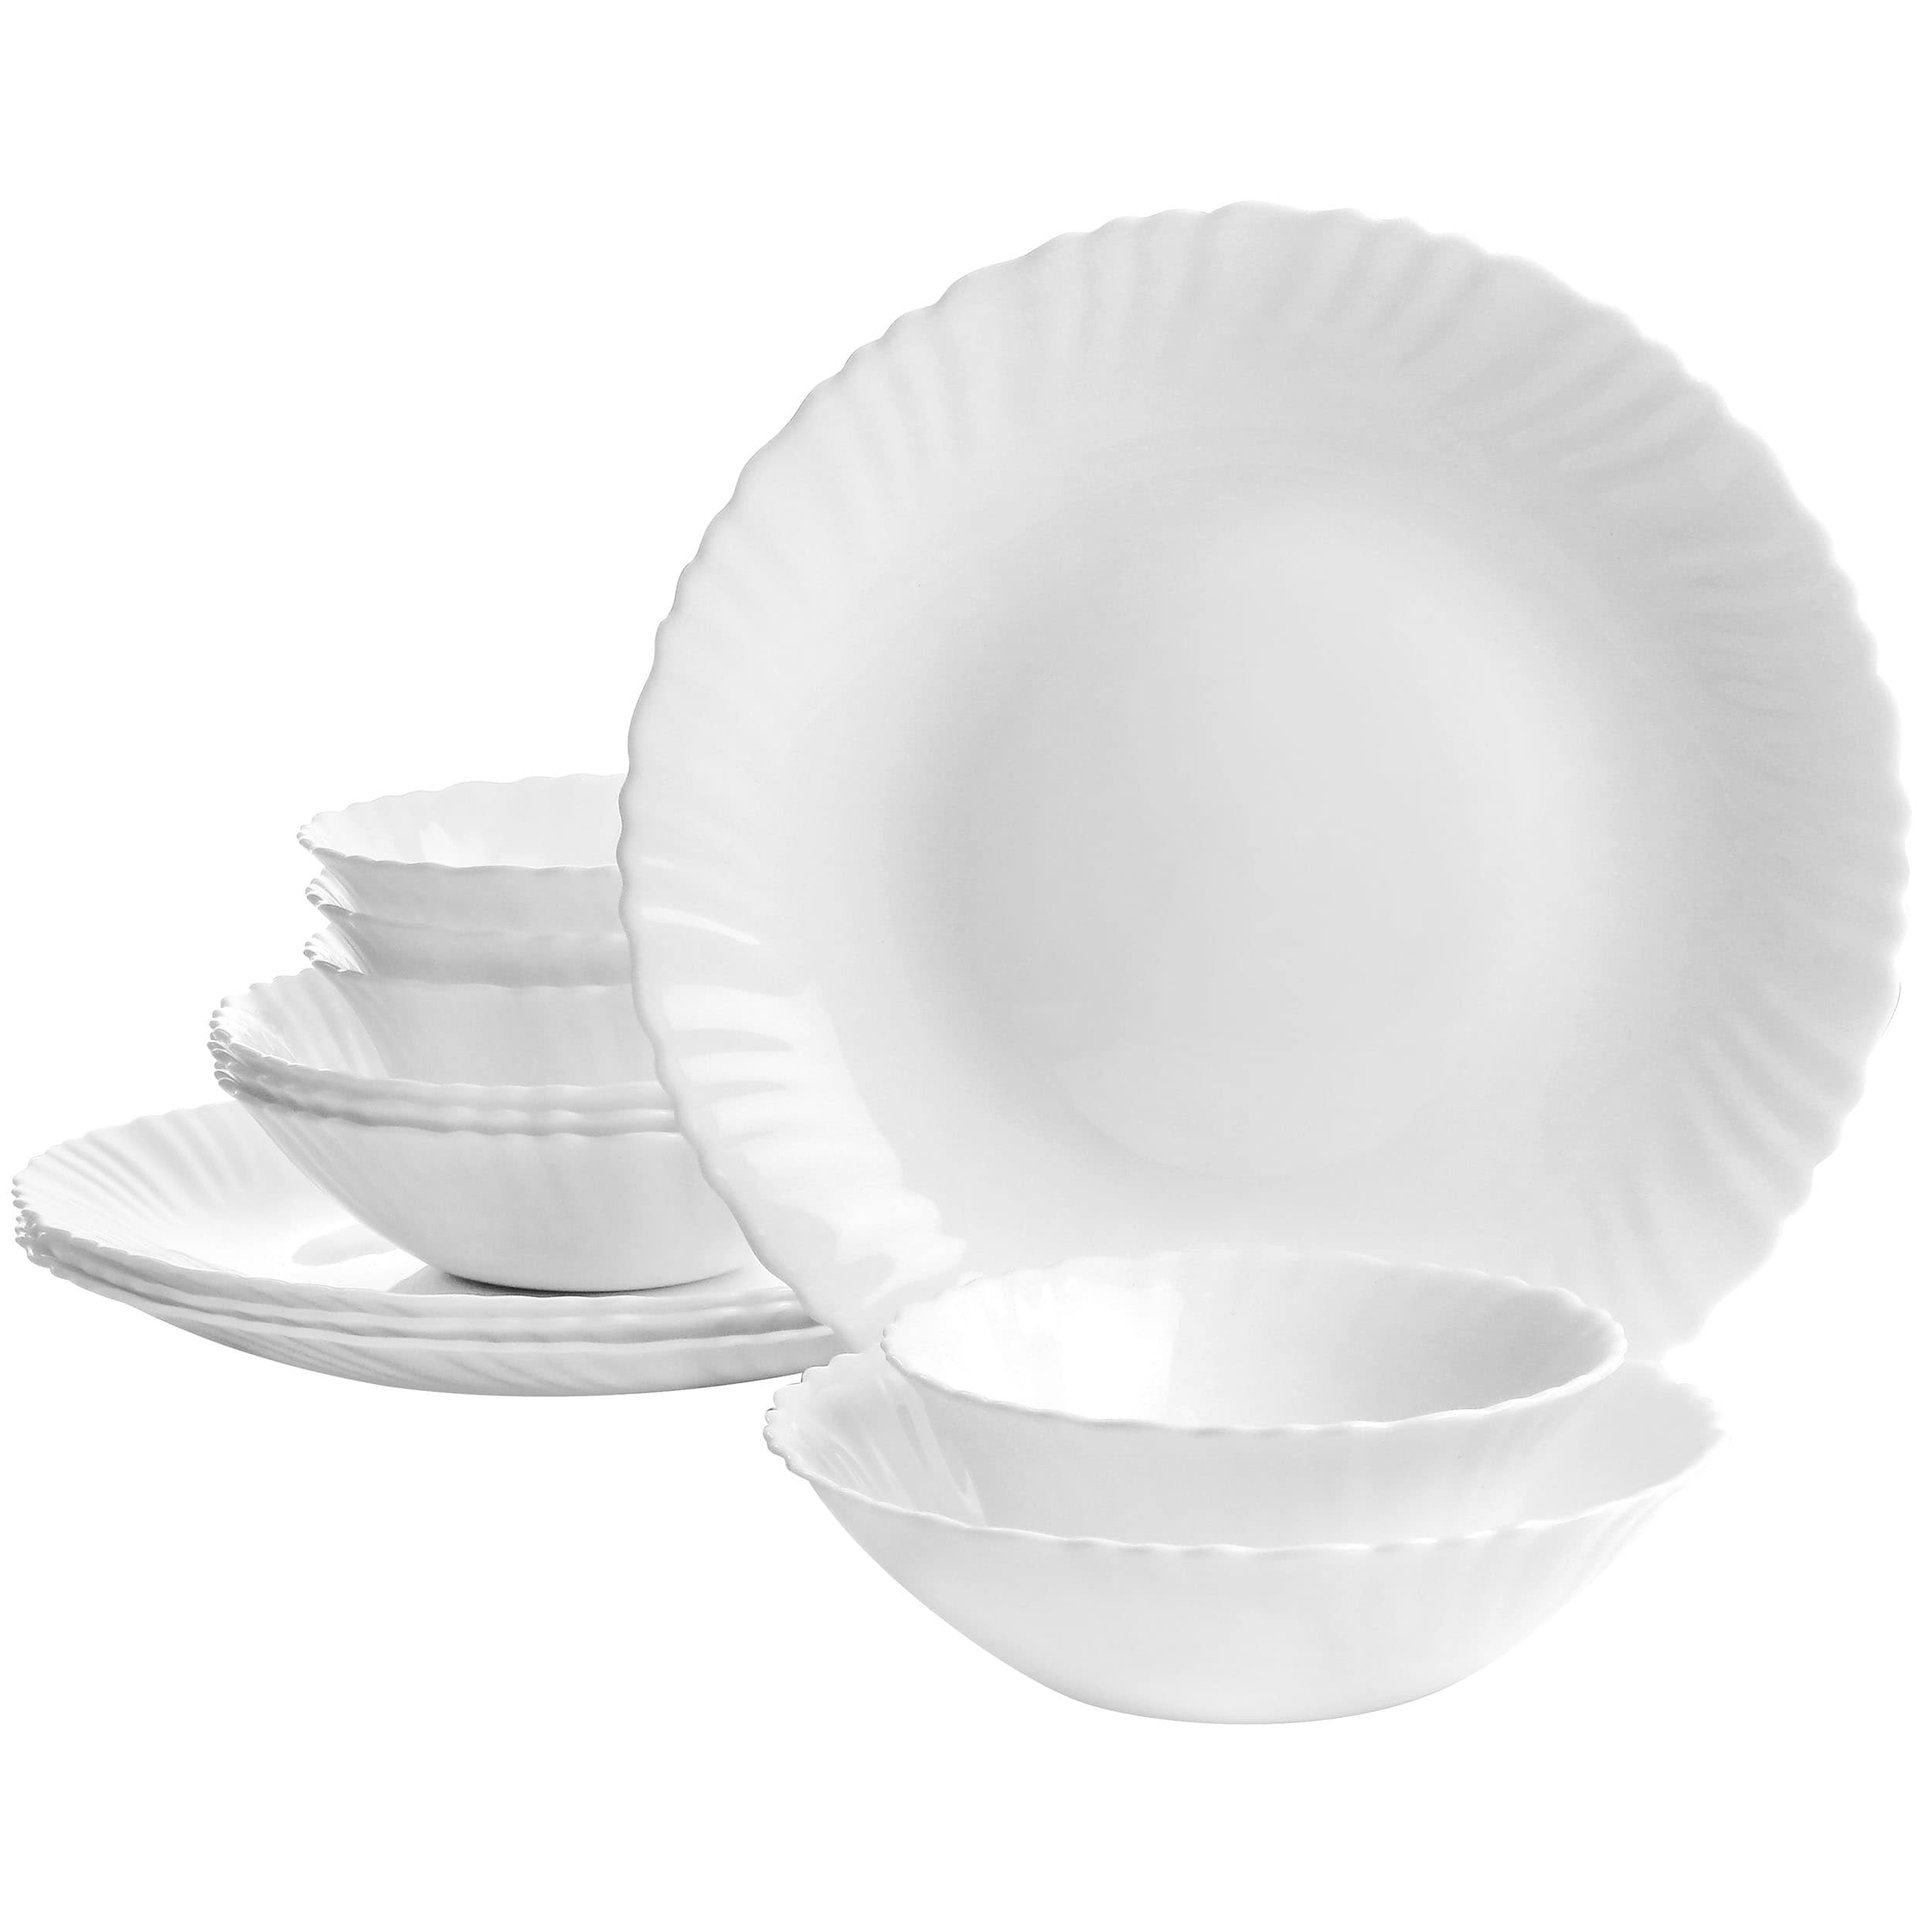 12 pcs set Dinner Salad Plate Bowl White Silver Pearl Luster Starburst Glass New 